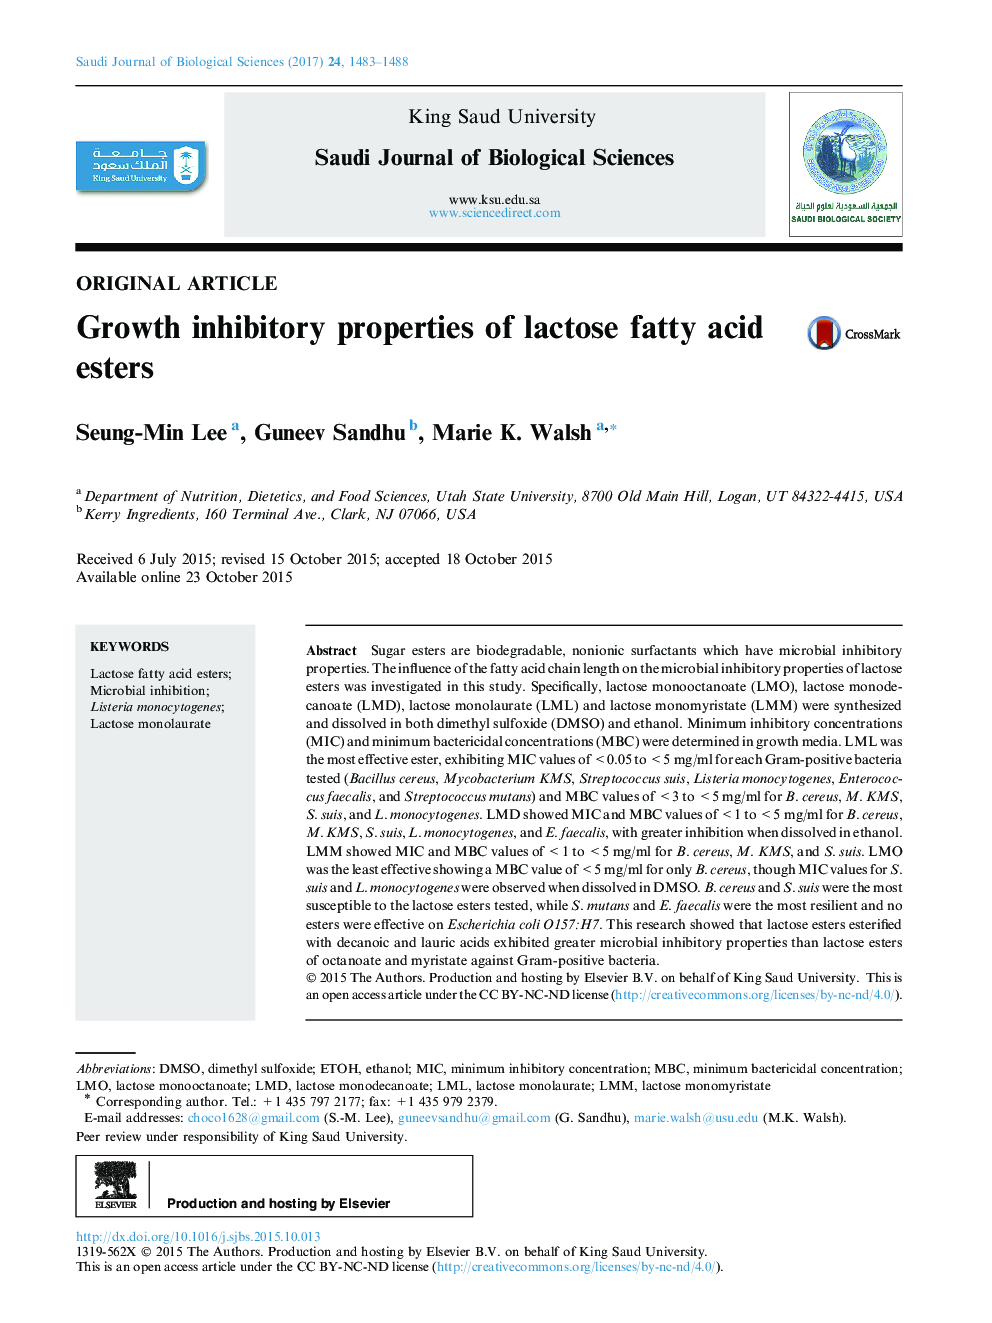 Original articleGrowth inhibitory properties of lactose fatty acid esters